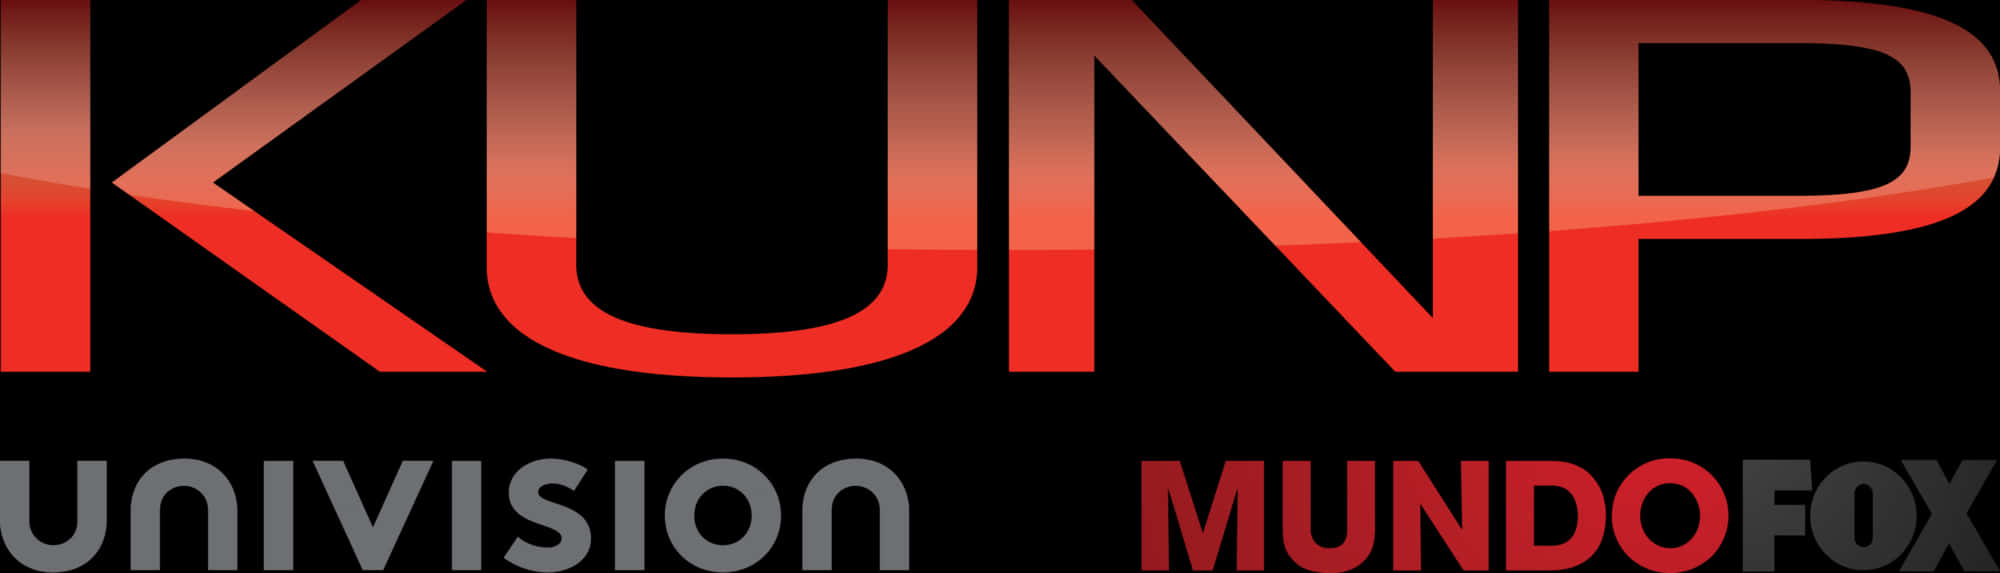 Univision Mundo Fox Logo Red Gradient Background PNG image